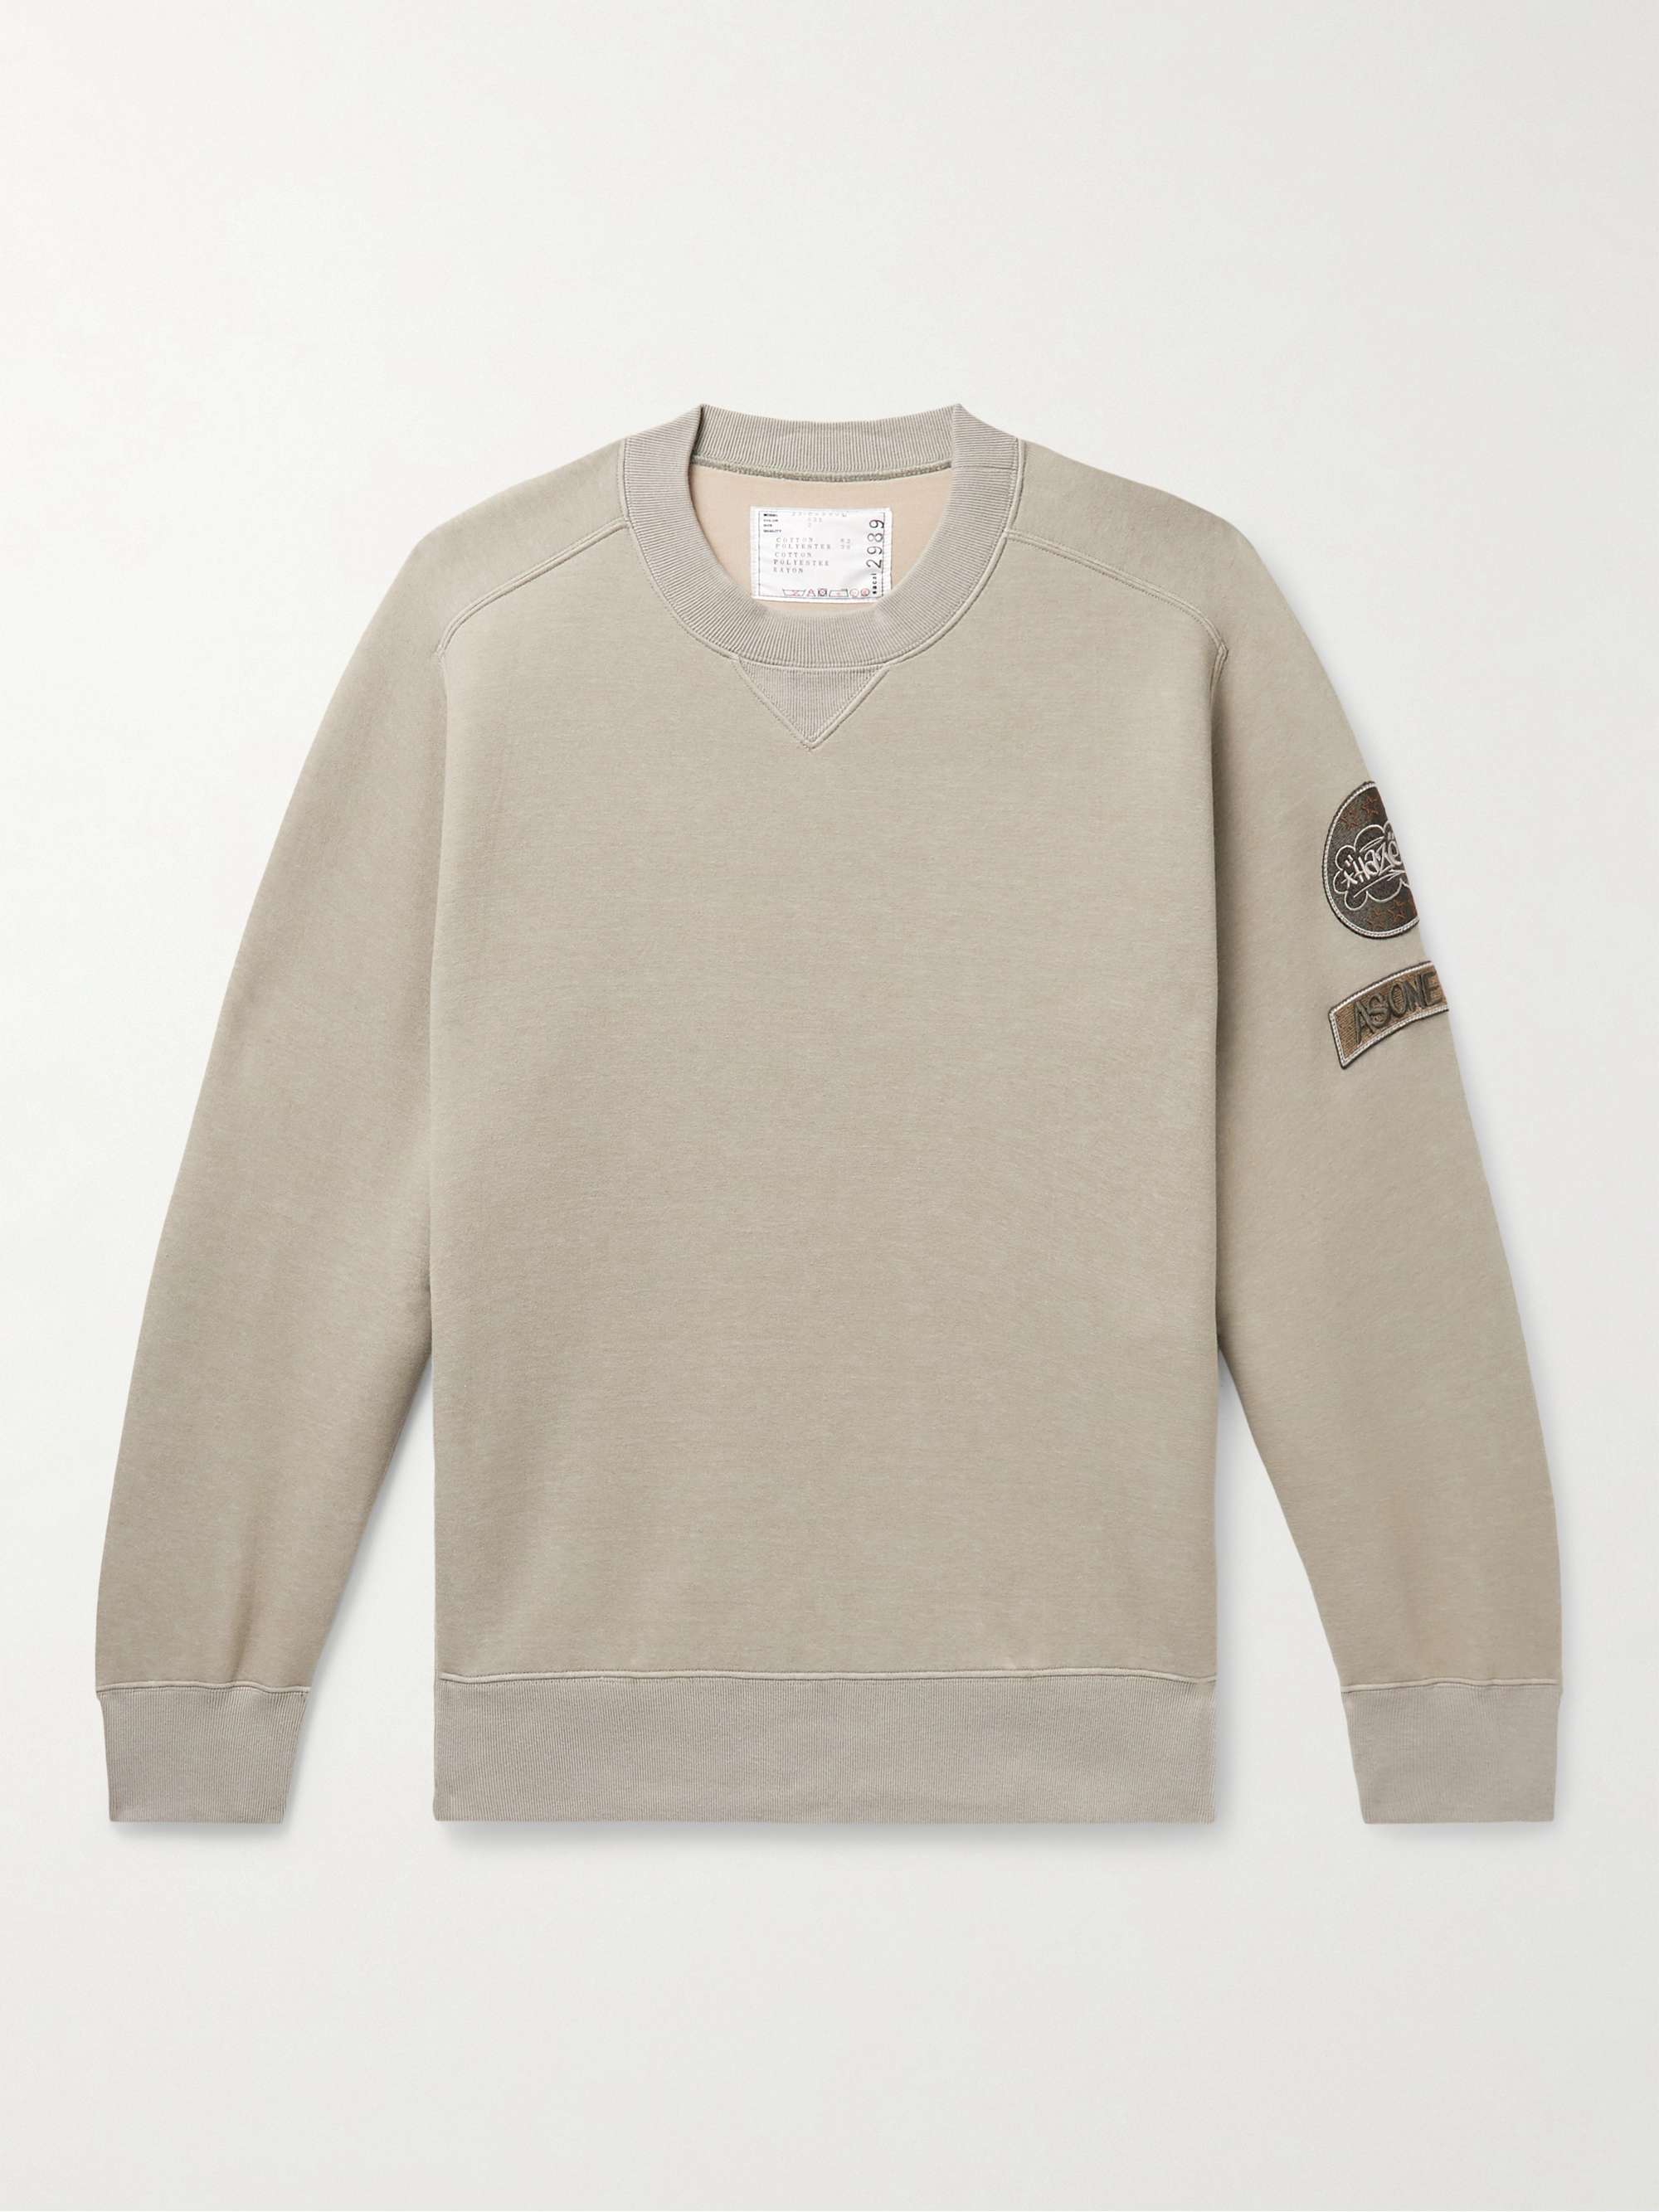 SACAI + Eric Haze Appliquéd Cotton-Blend Jersey Sweatshirt